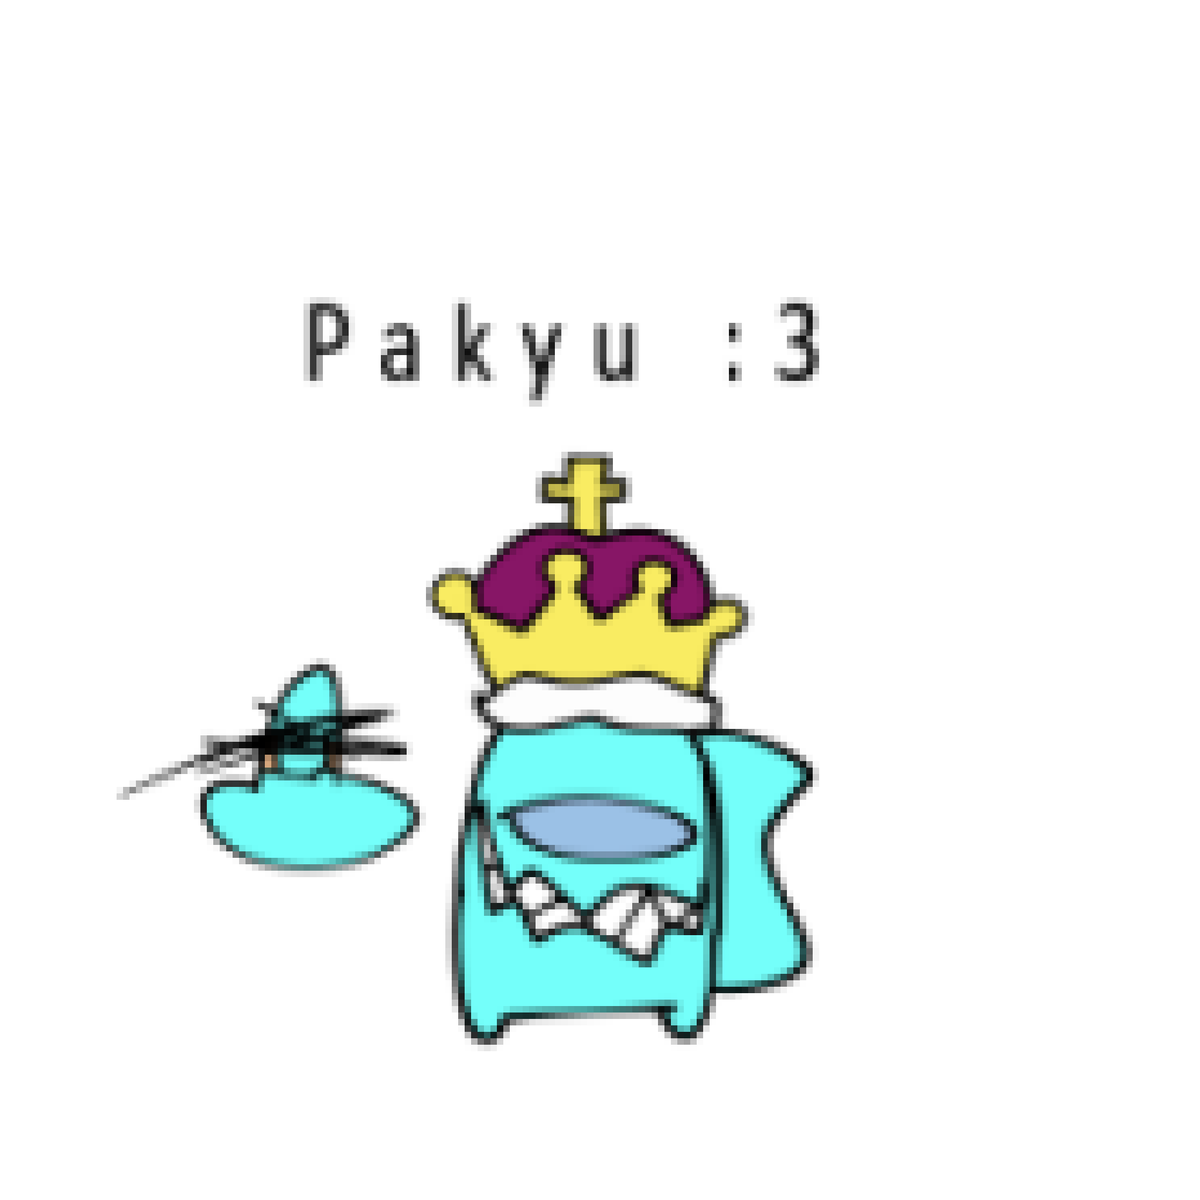 Powers just wants to say pakyu! 

#impostorv4